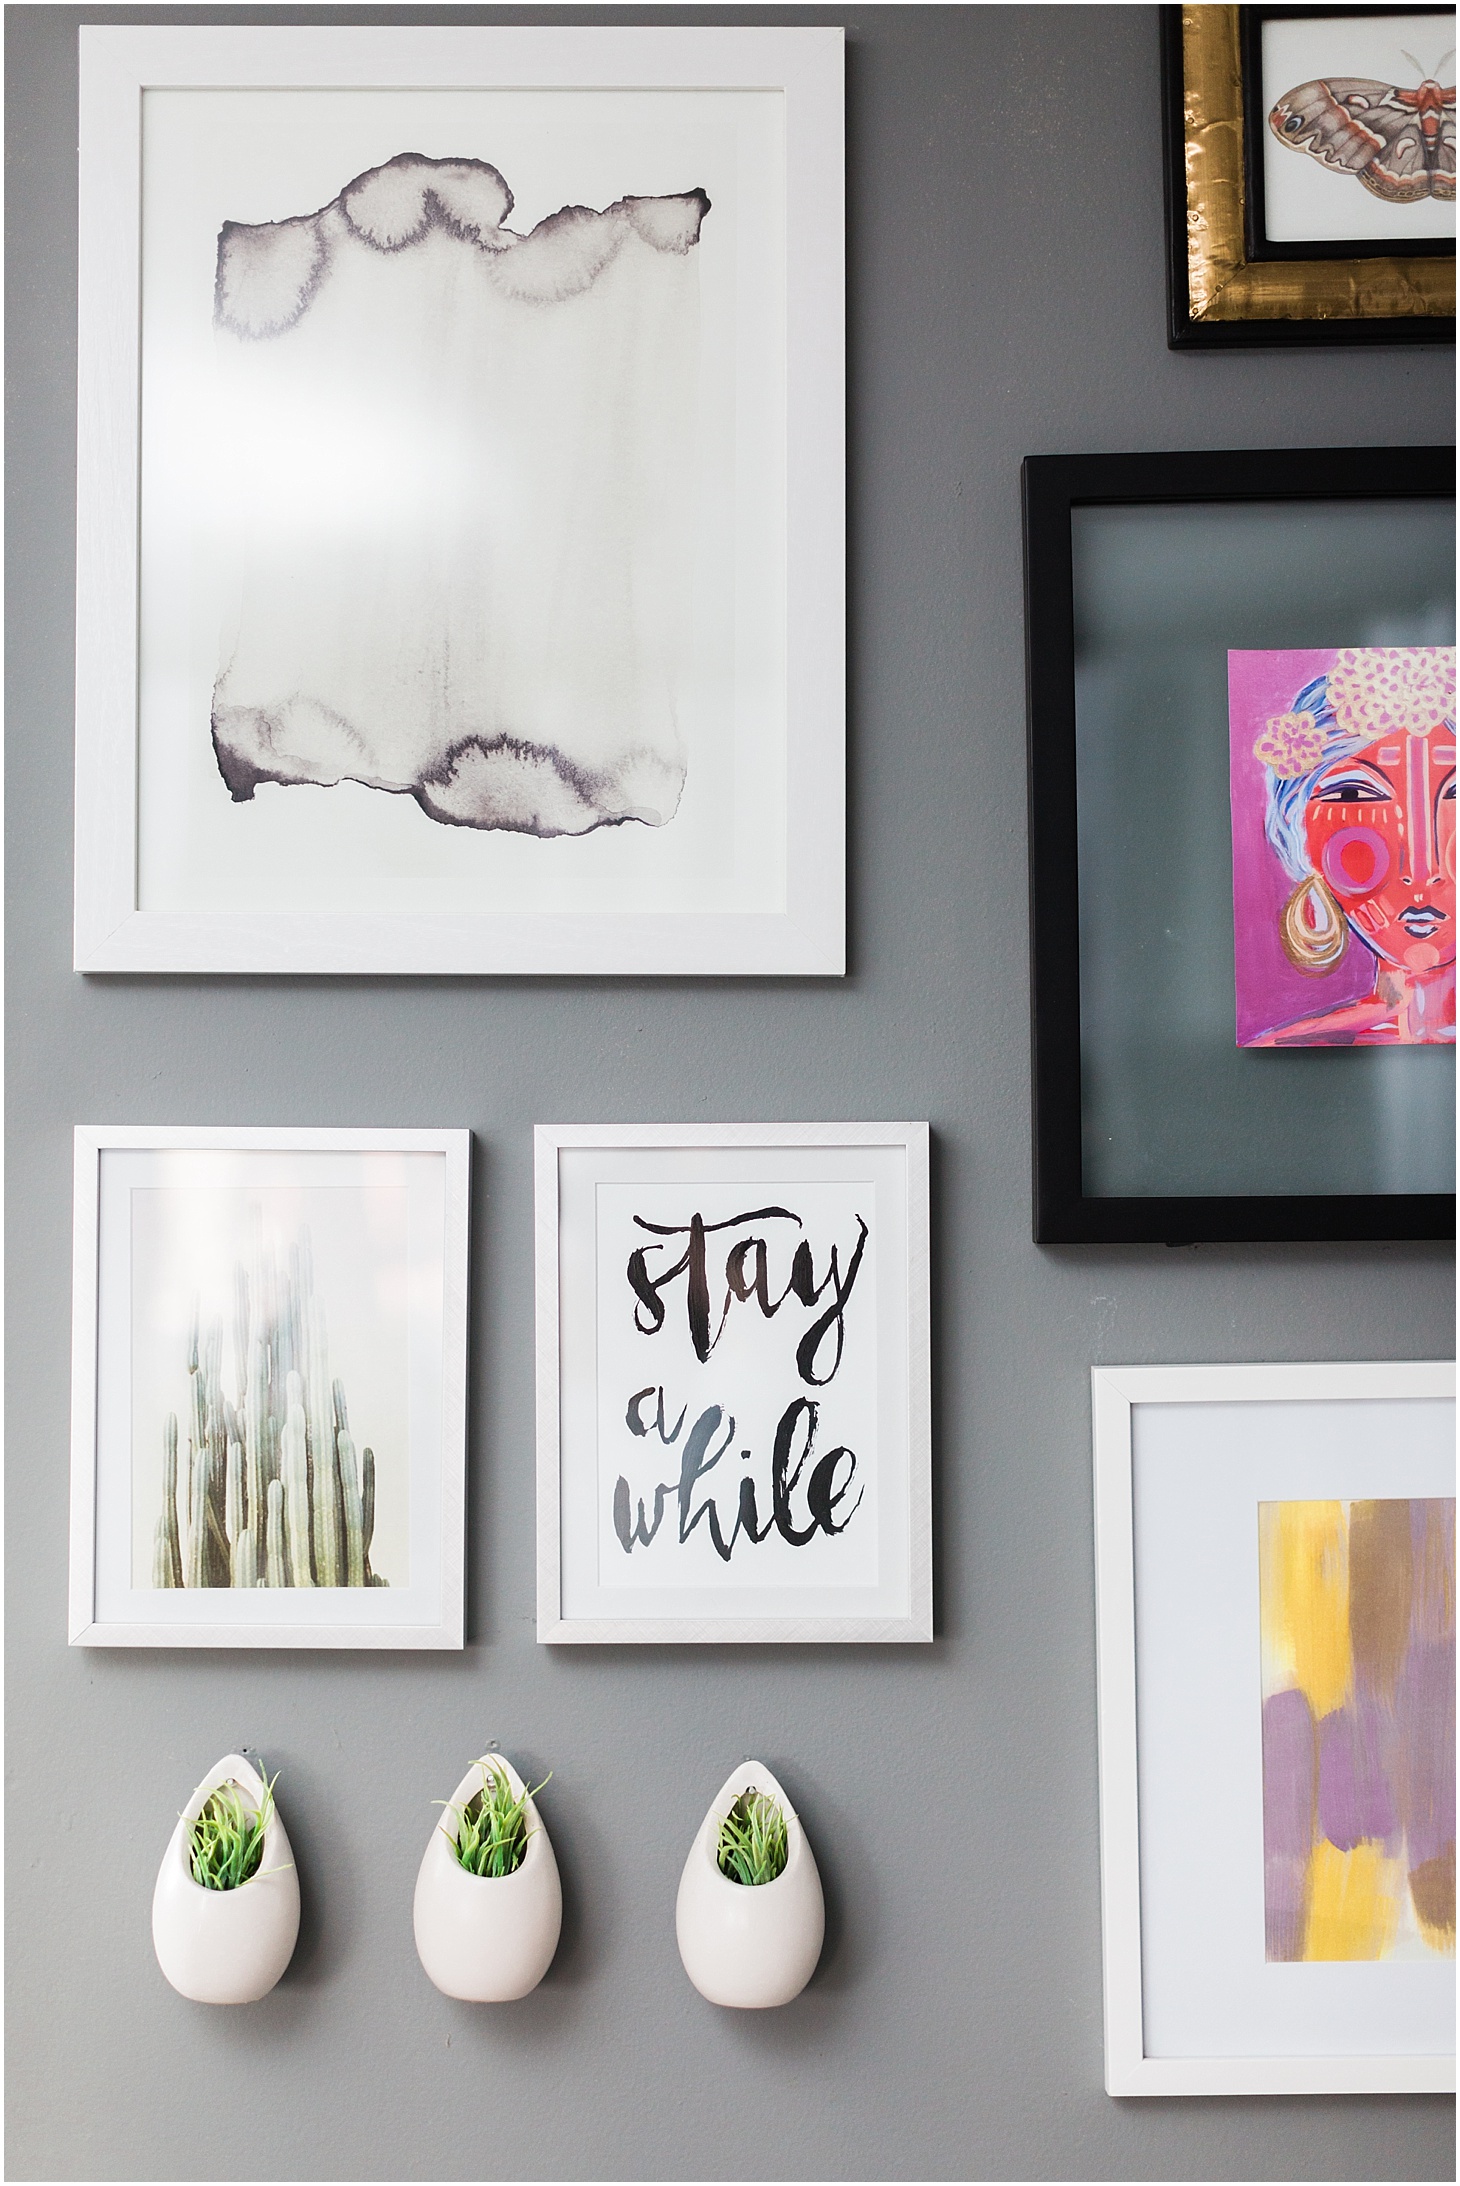 Small Space Living Room Inspiration | Modern Basement Apartment Tour in Capitol Hill | Sarah Bradshaw Photography | Washington, DC Interior Design Photographer